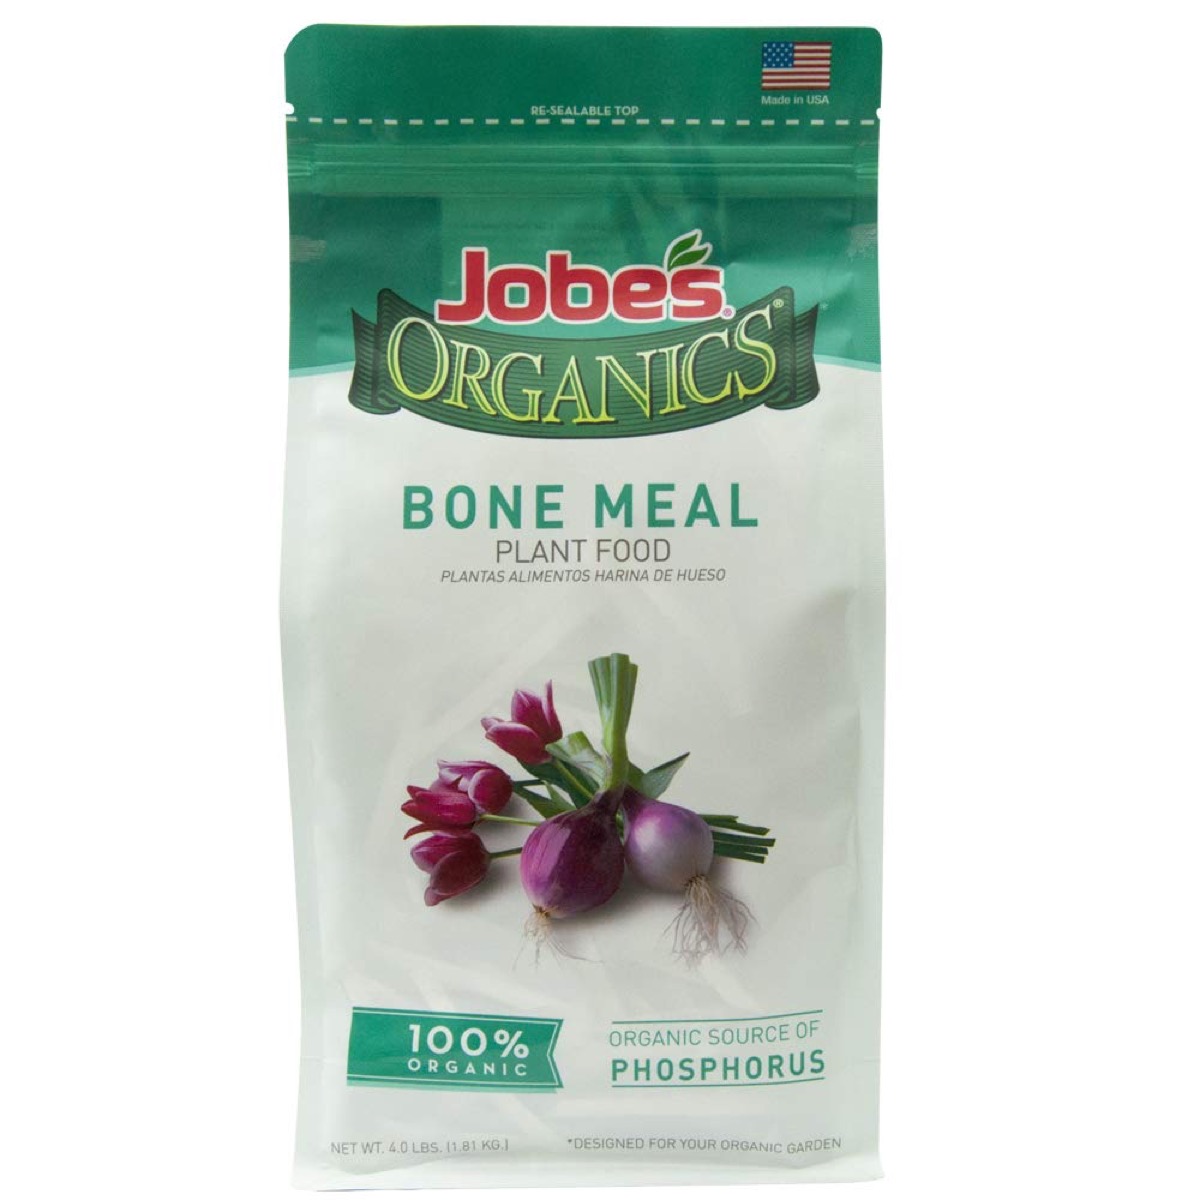 jobe's organics bone meal fertilizer